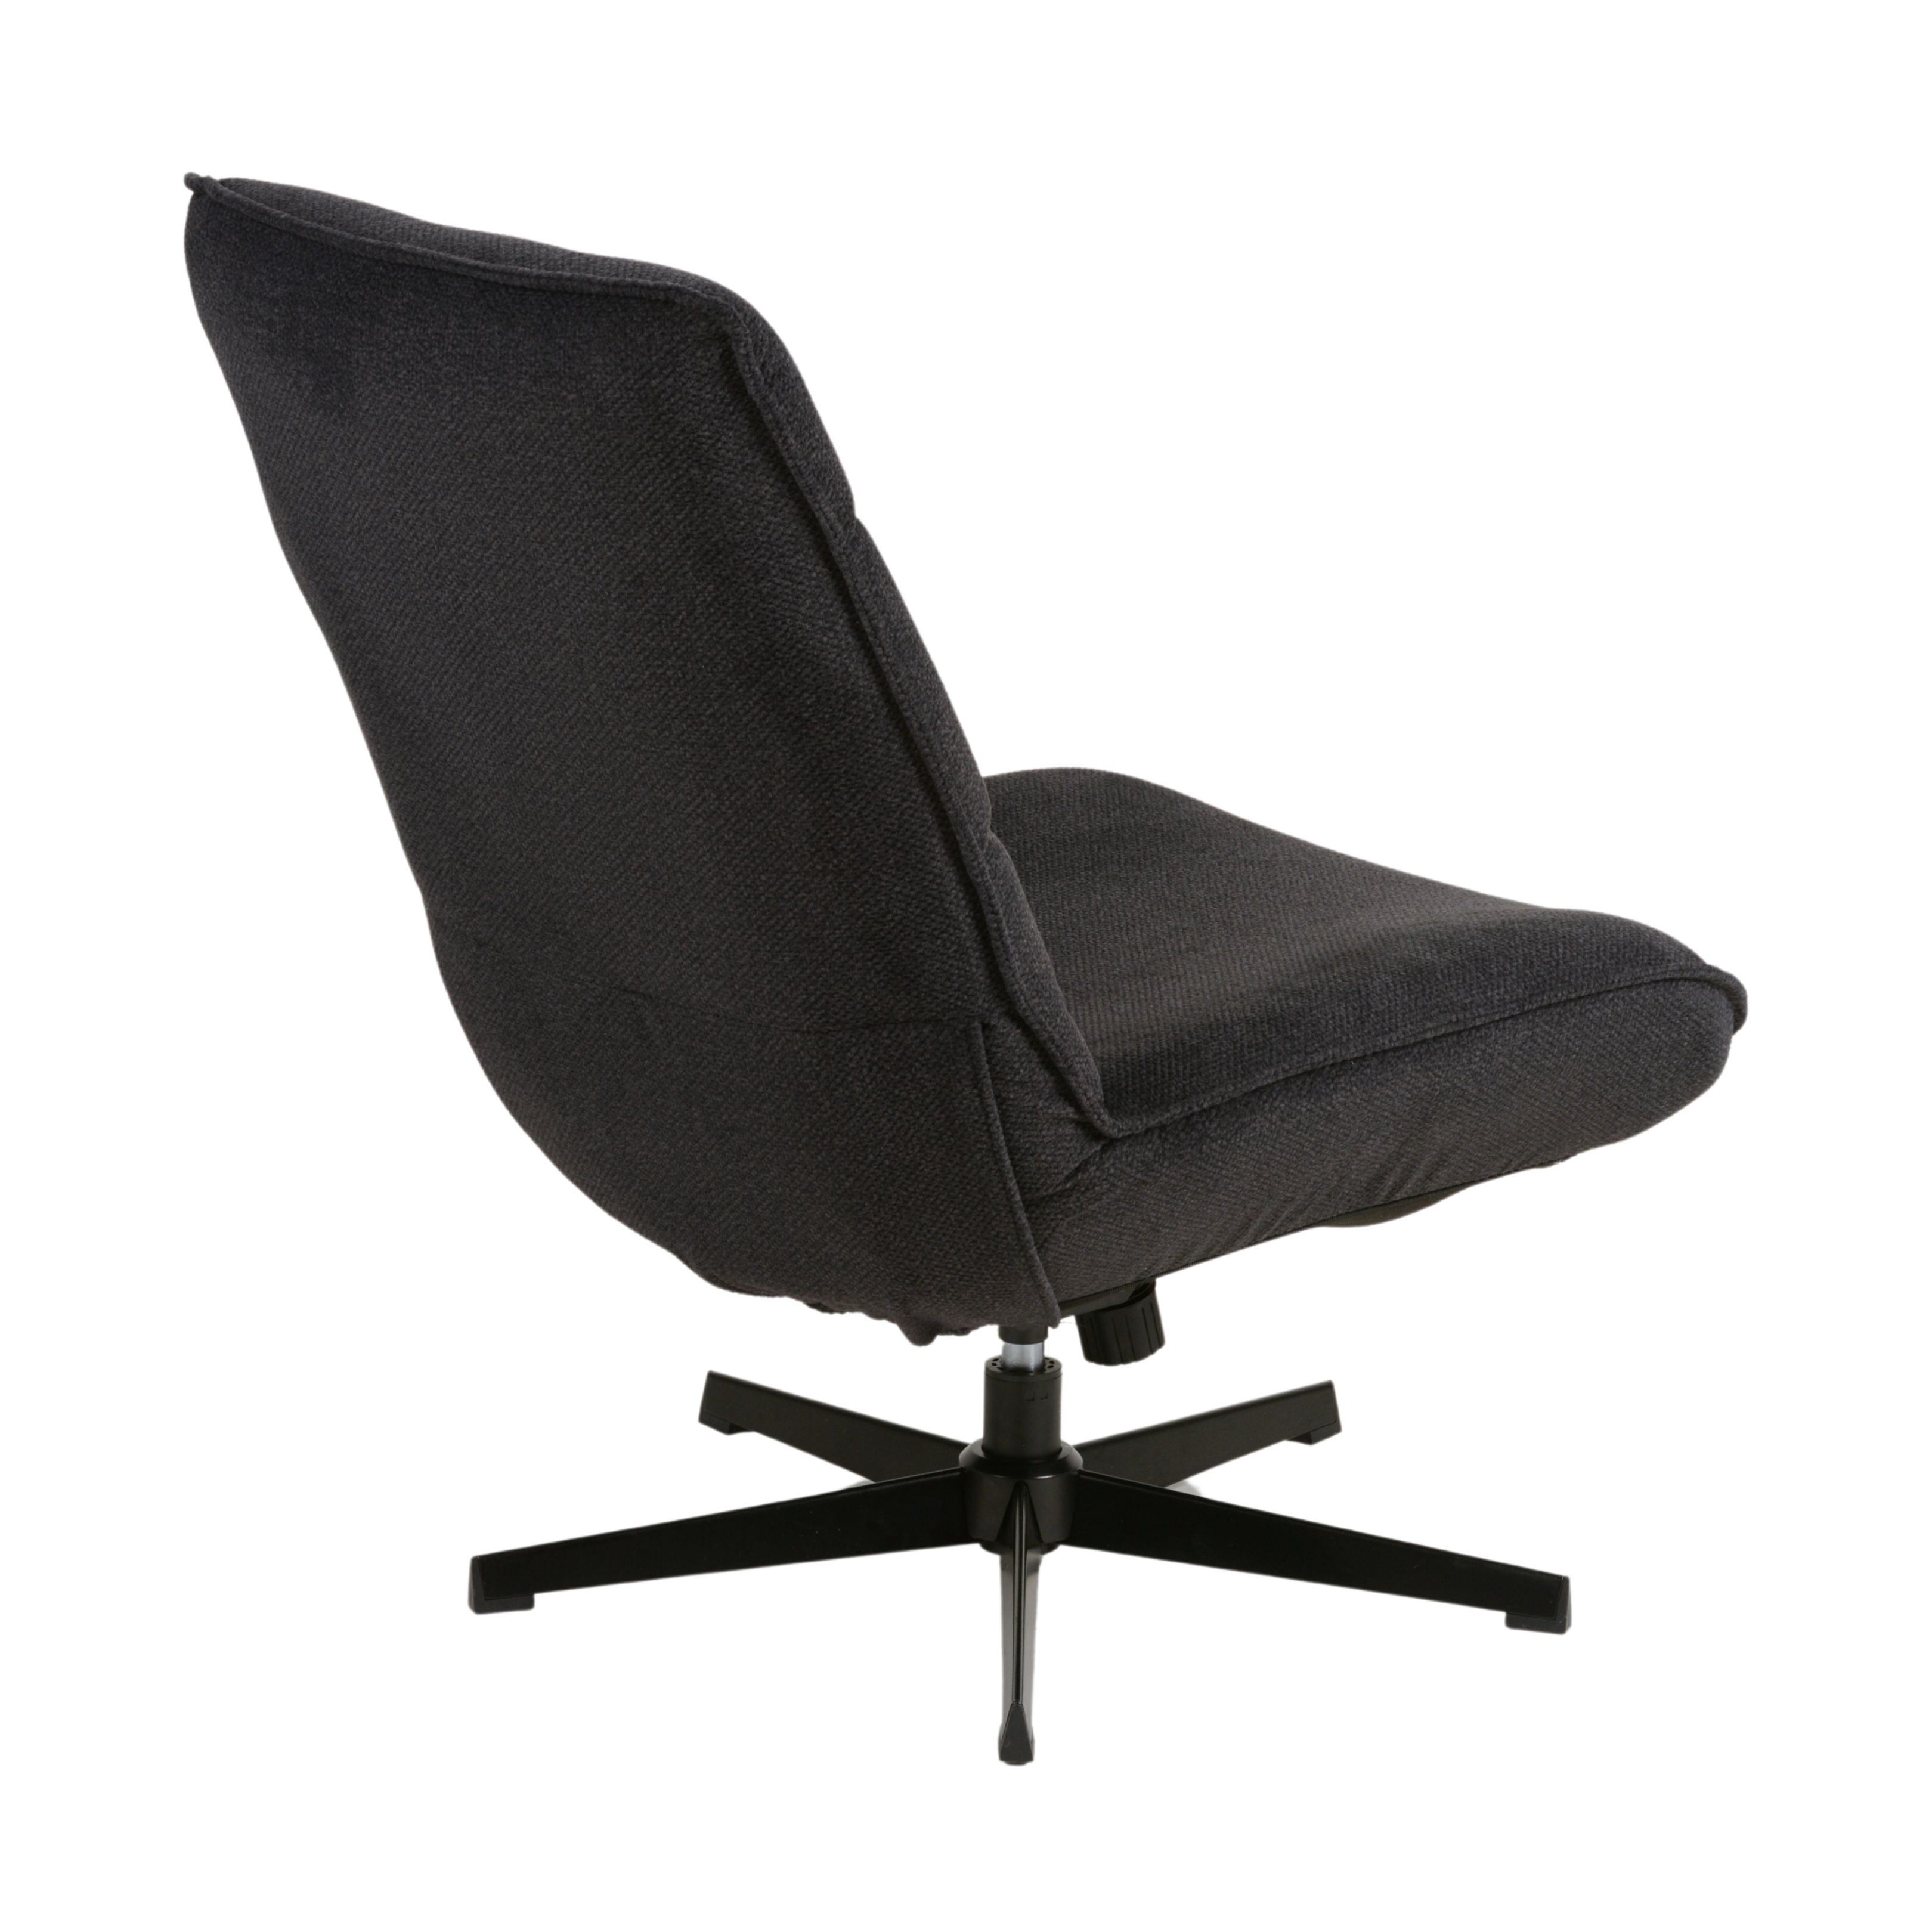 Dewsbury Black Accent Chairs